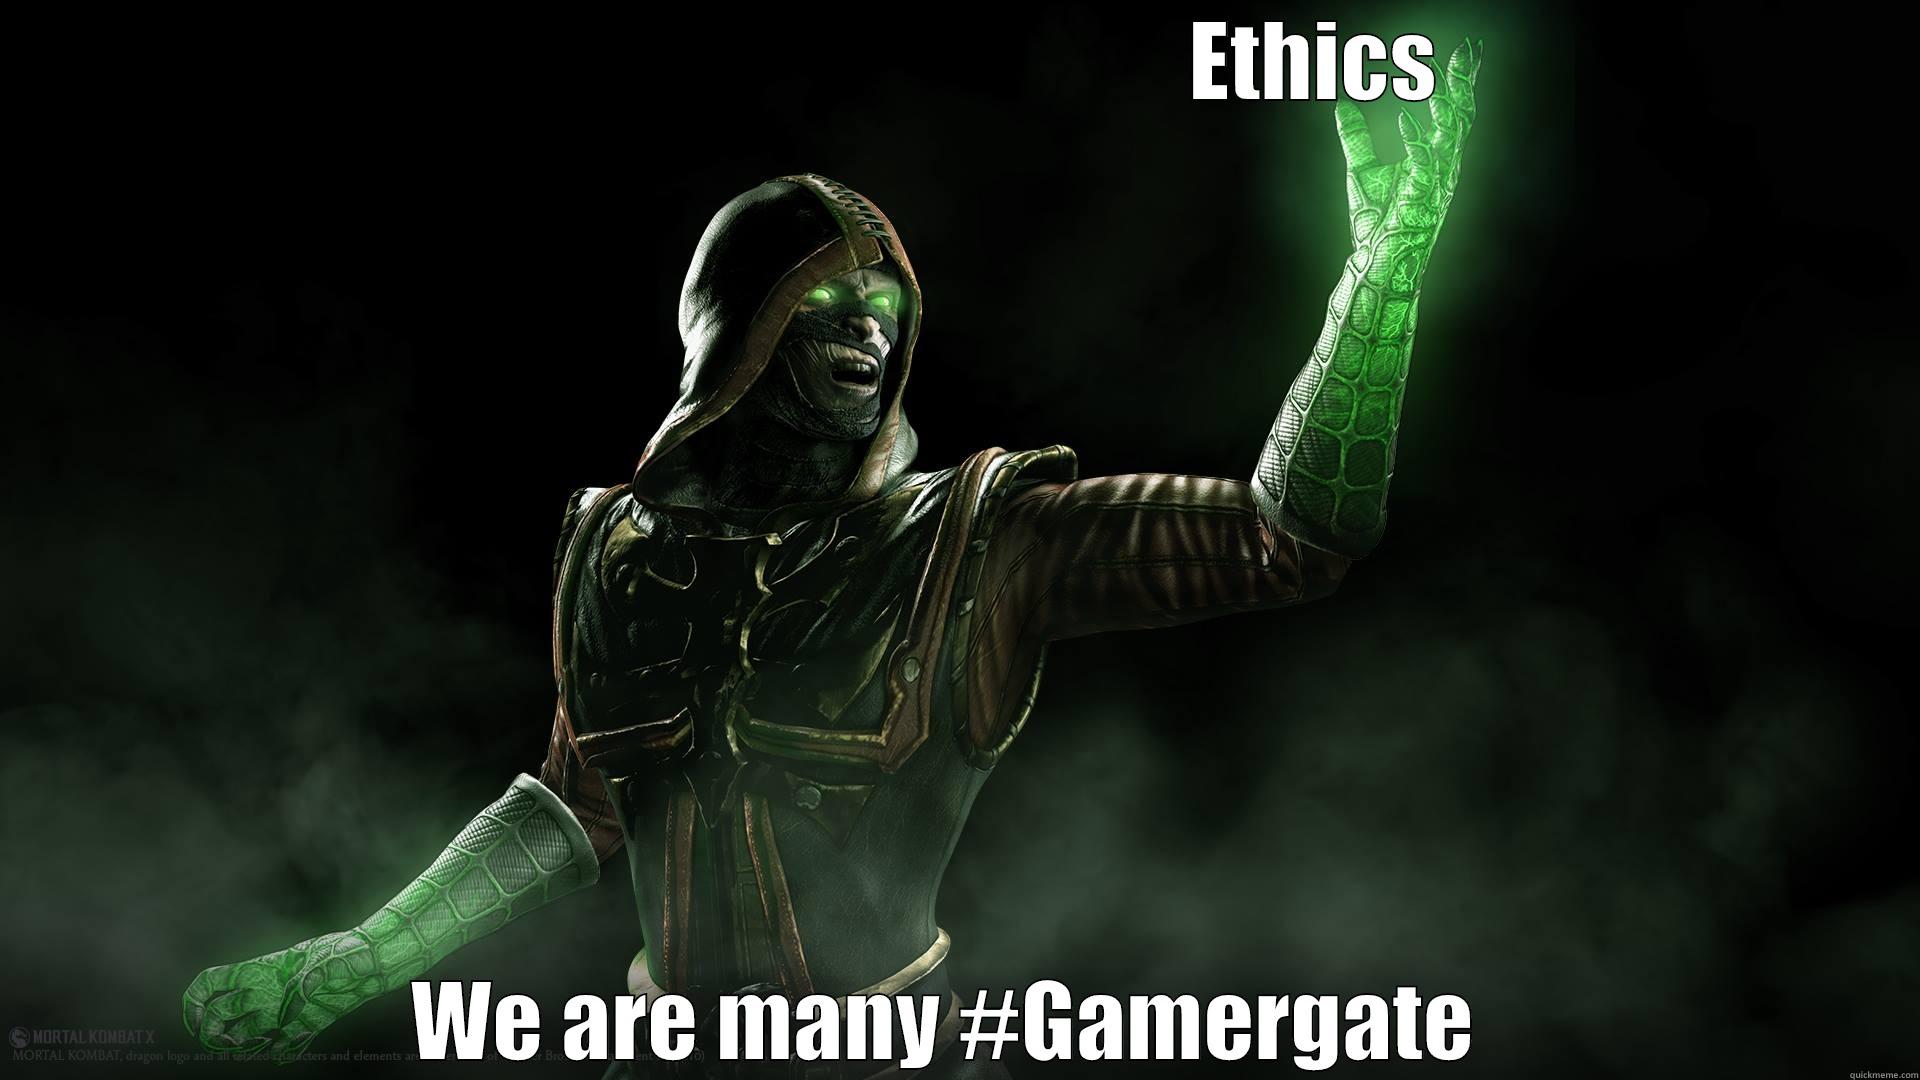                                          ETHICS WE ARE MANY #GAMERGATE  Misc